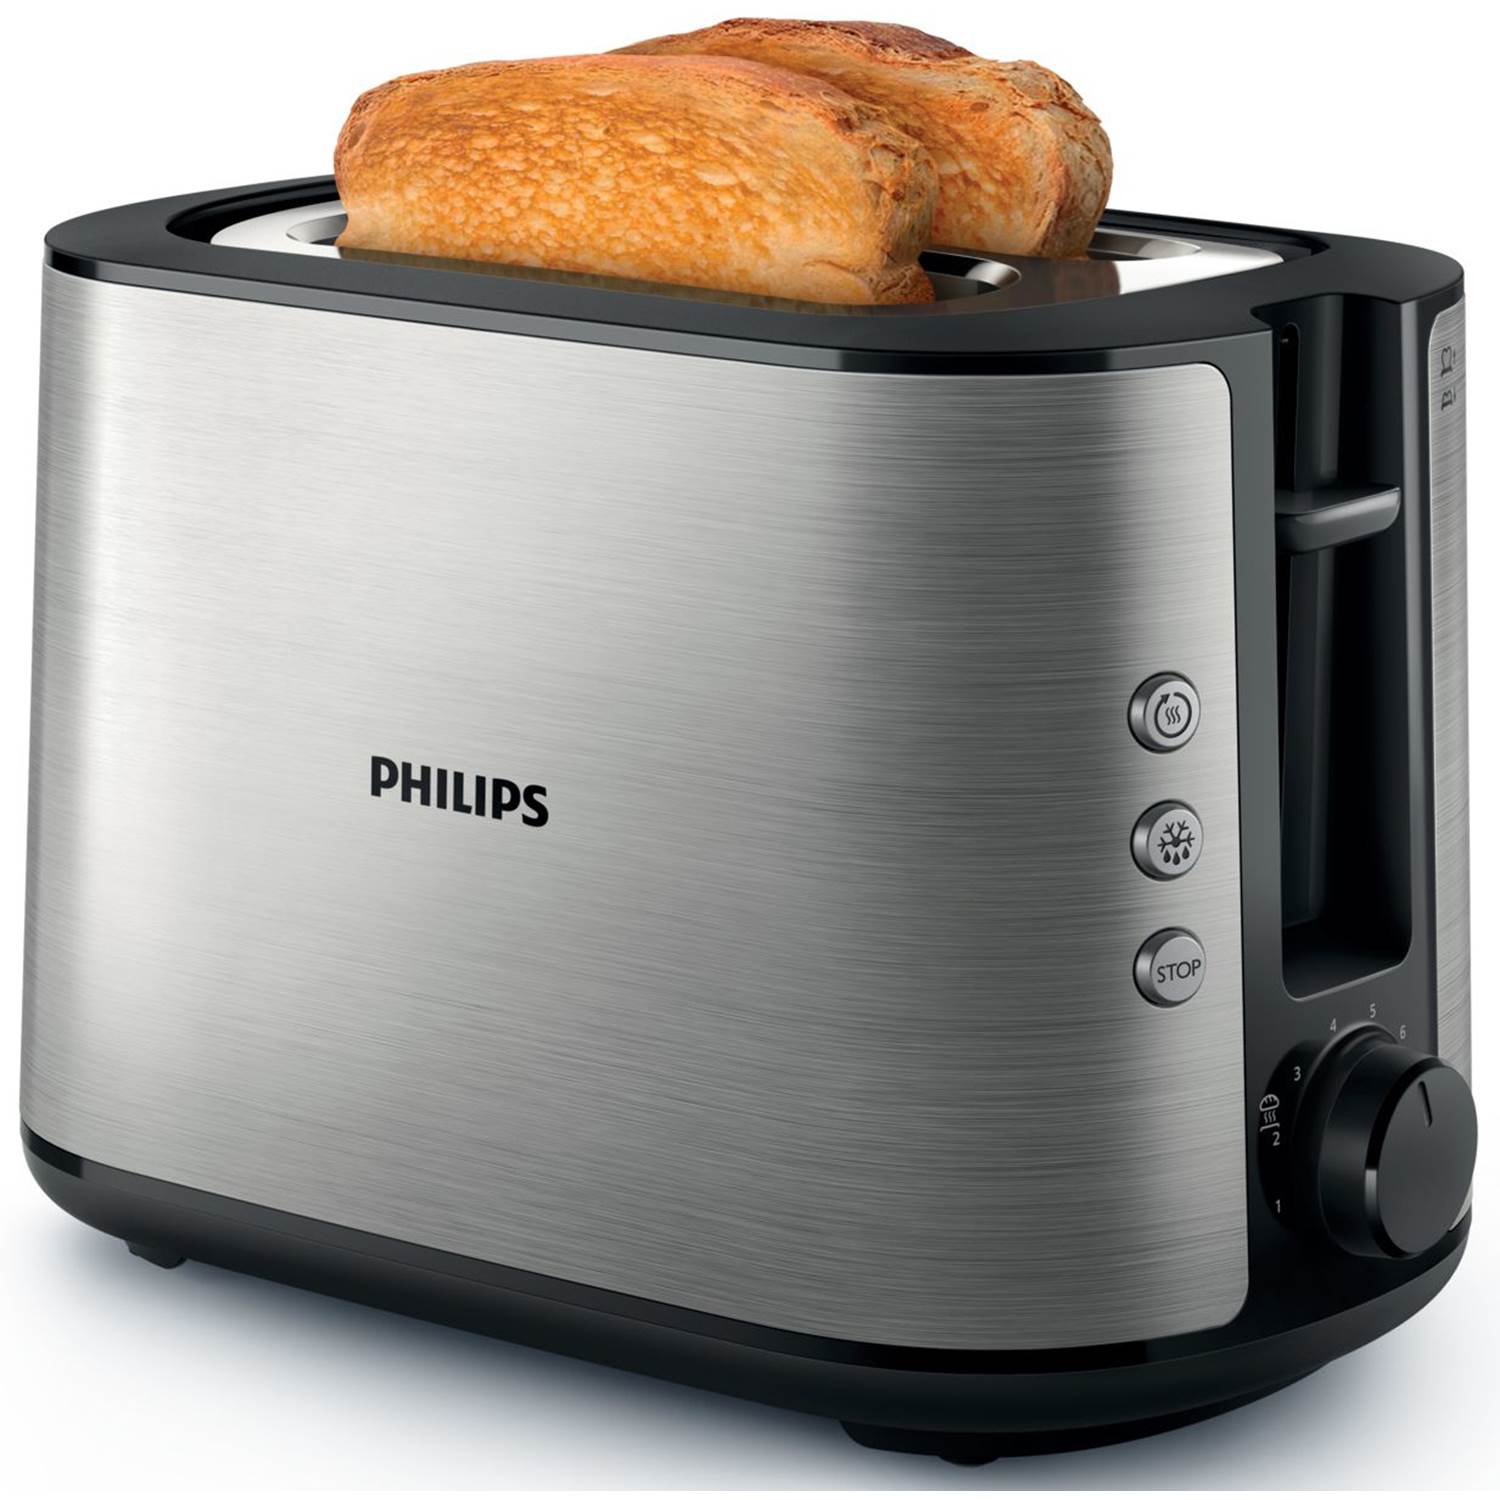 Philips HD2650/90